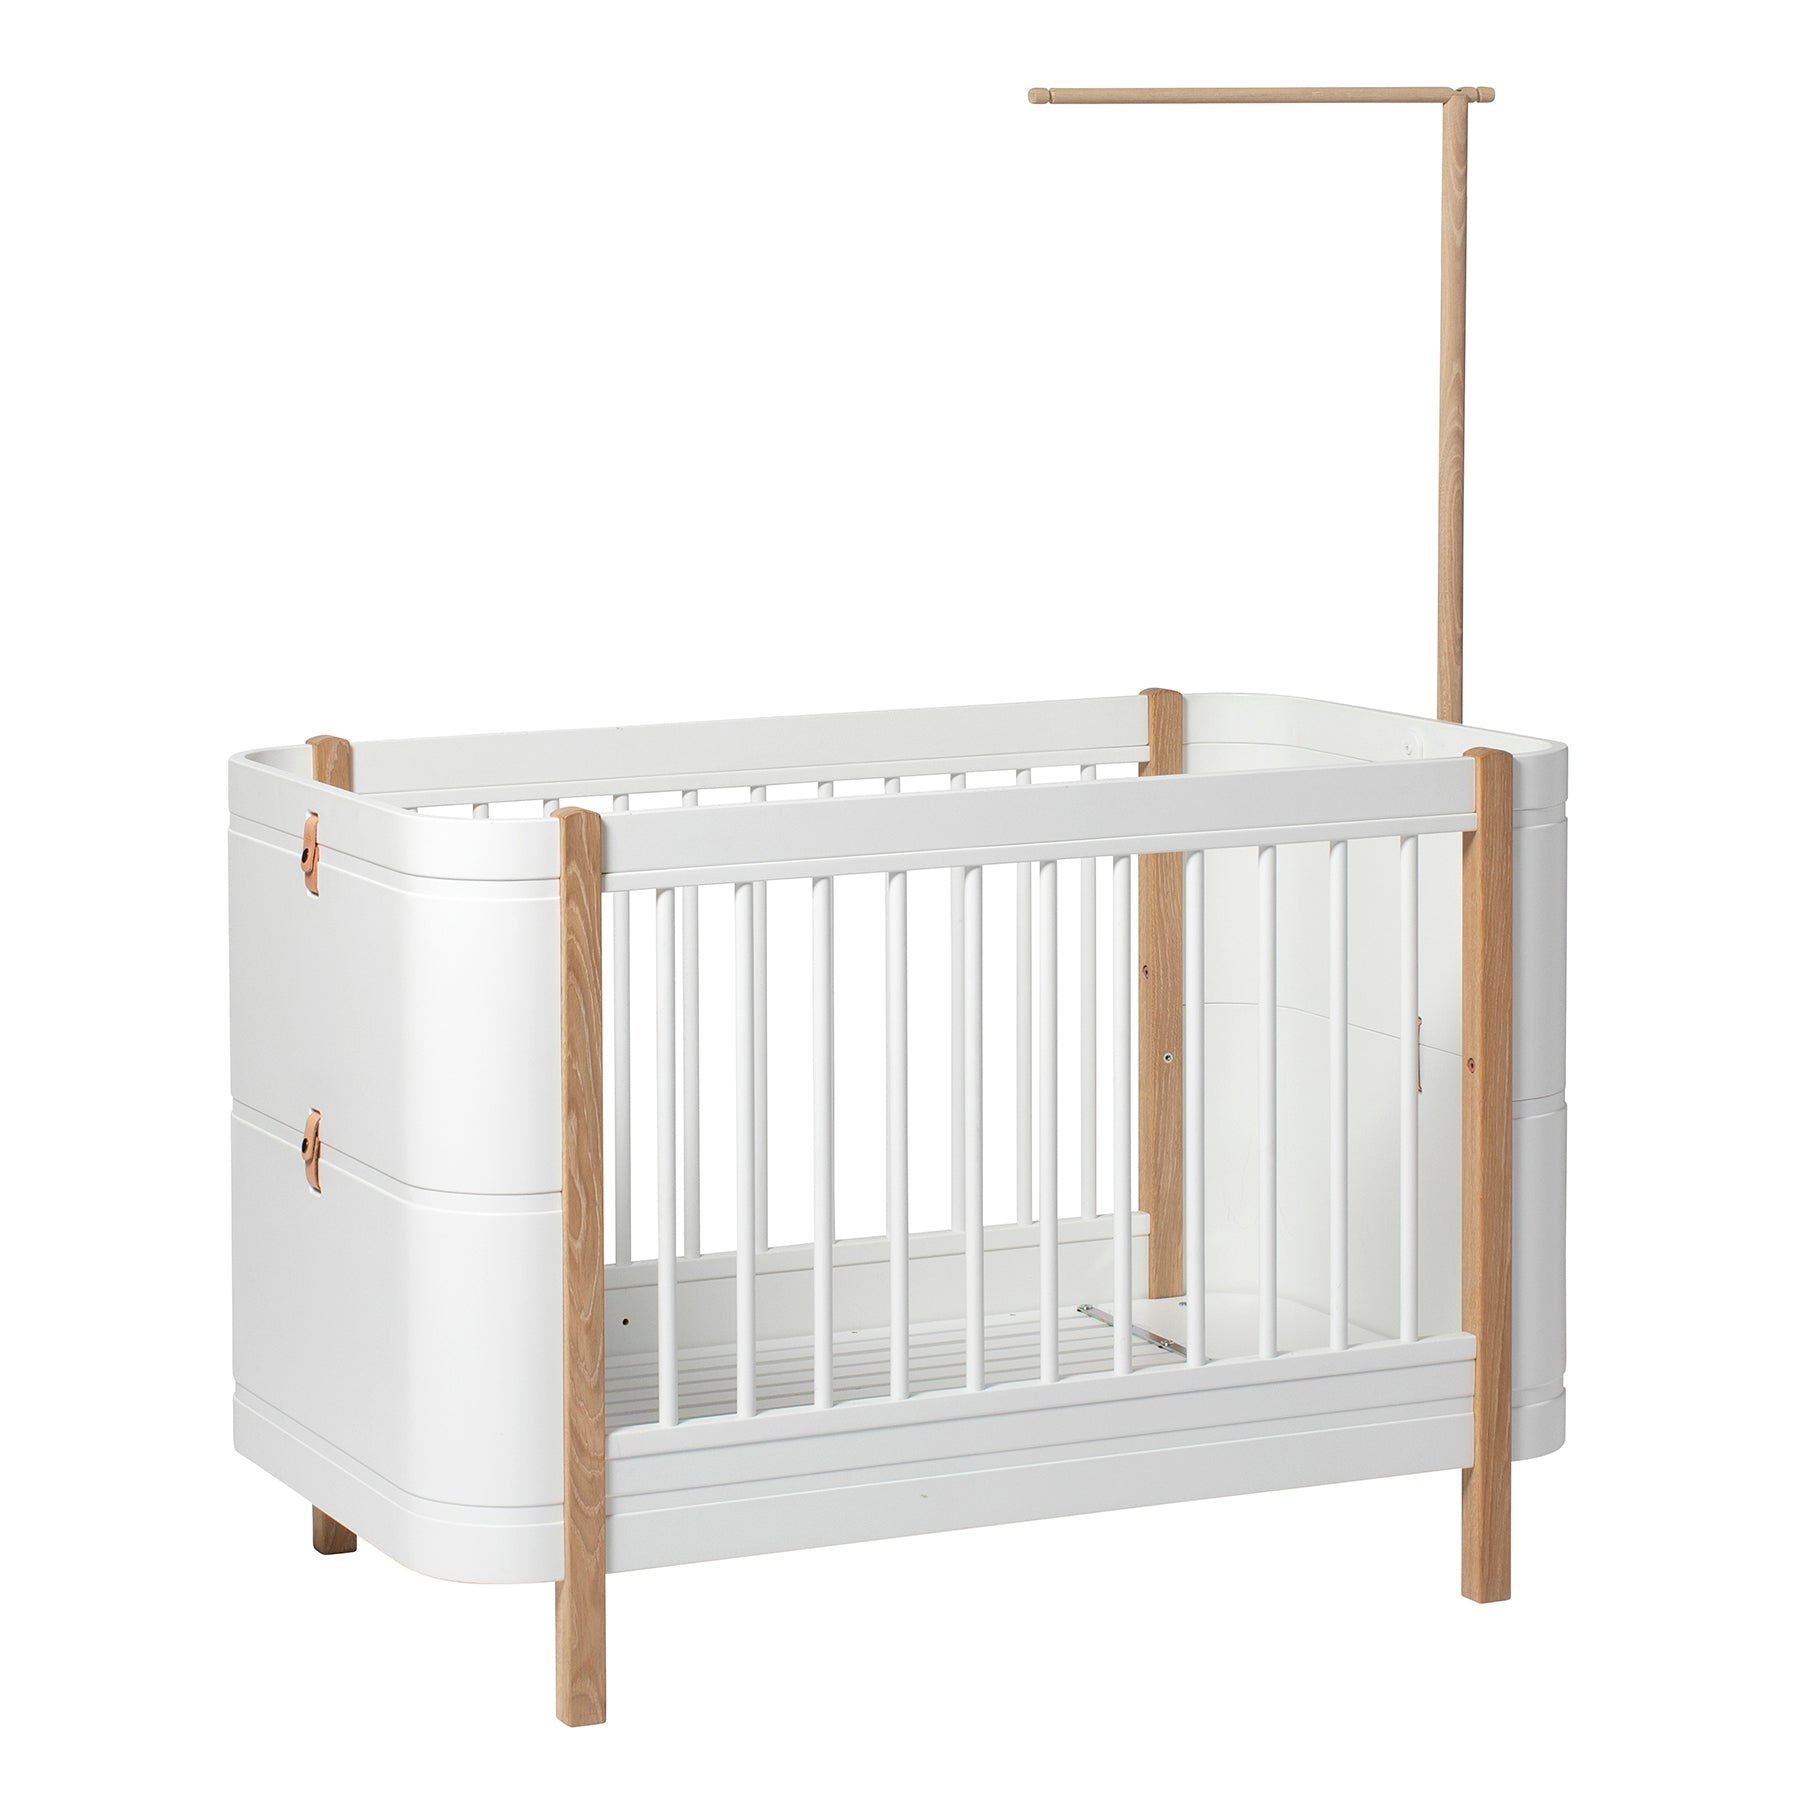 Oliver Furniture Wood Mini+ Babybett exkl. Umbauset, weiss/Eiche